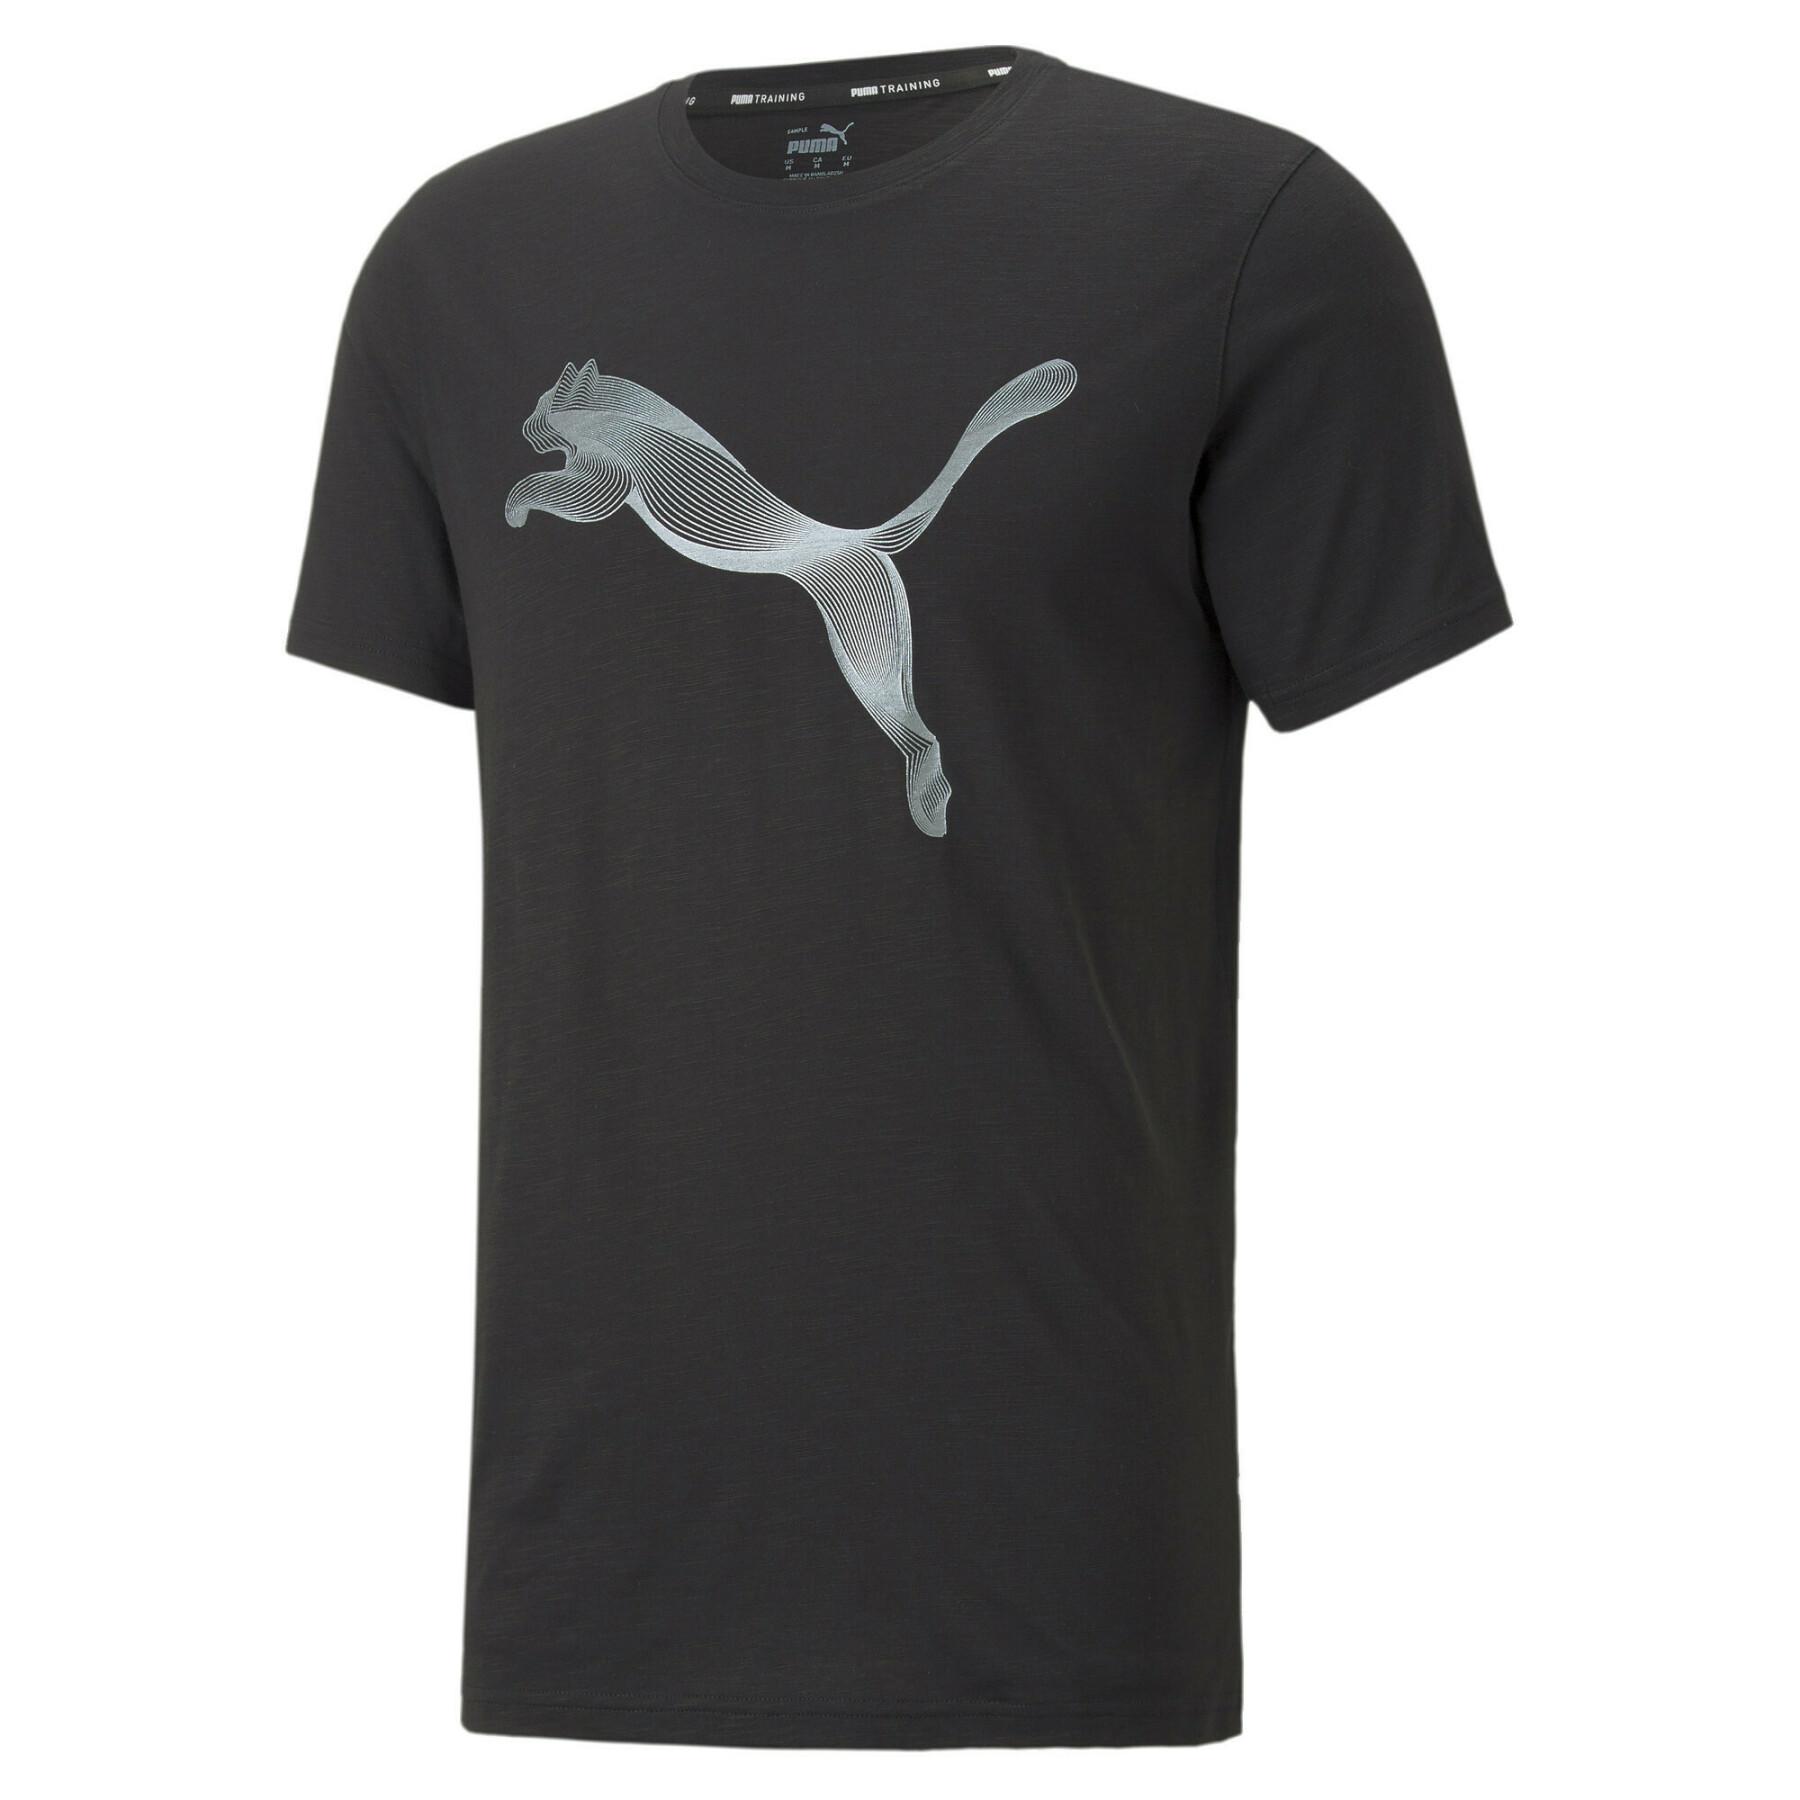 Camiseta Puma Performance - Camisetas - Hombre - Ropa